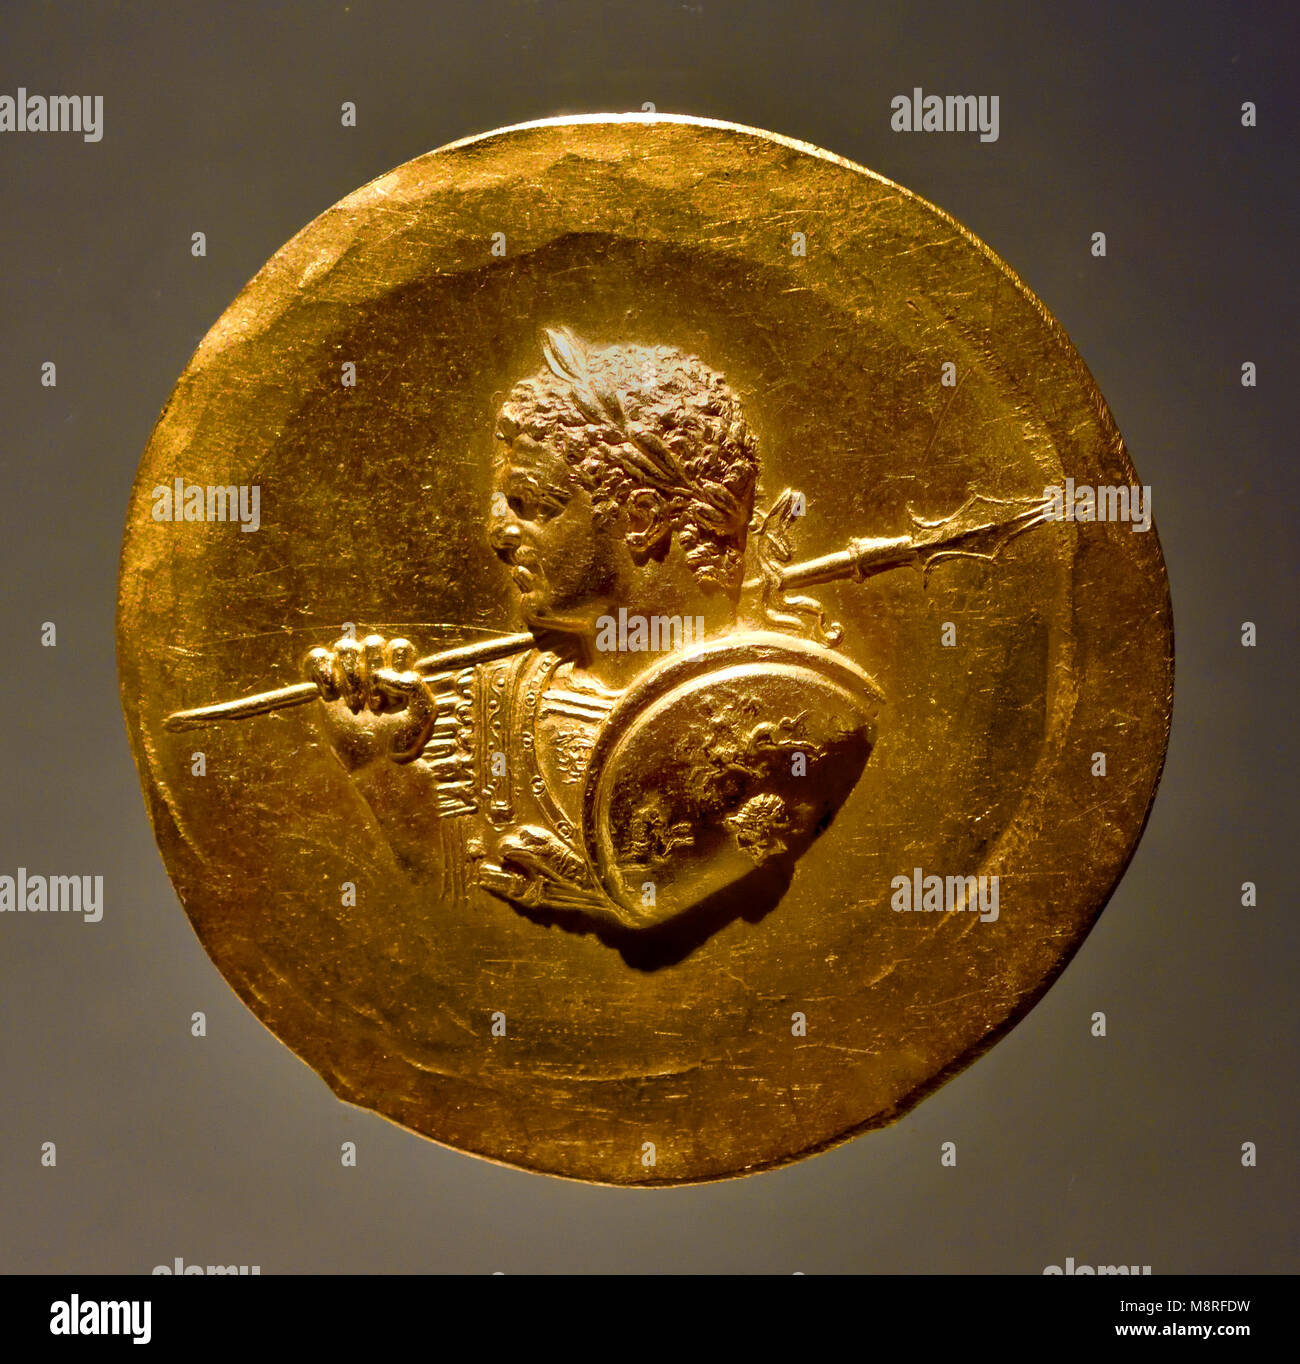 Golden Coin of  Roman emperor Caracalla ( Marcus Aurelius Severus Antoninus Augustus), formally known as Antoninus, was a Roman emperor from AD 198 to 217. Roman emperor Caracalla  with cuirassed and Laureate bust ) Stock Photo